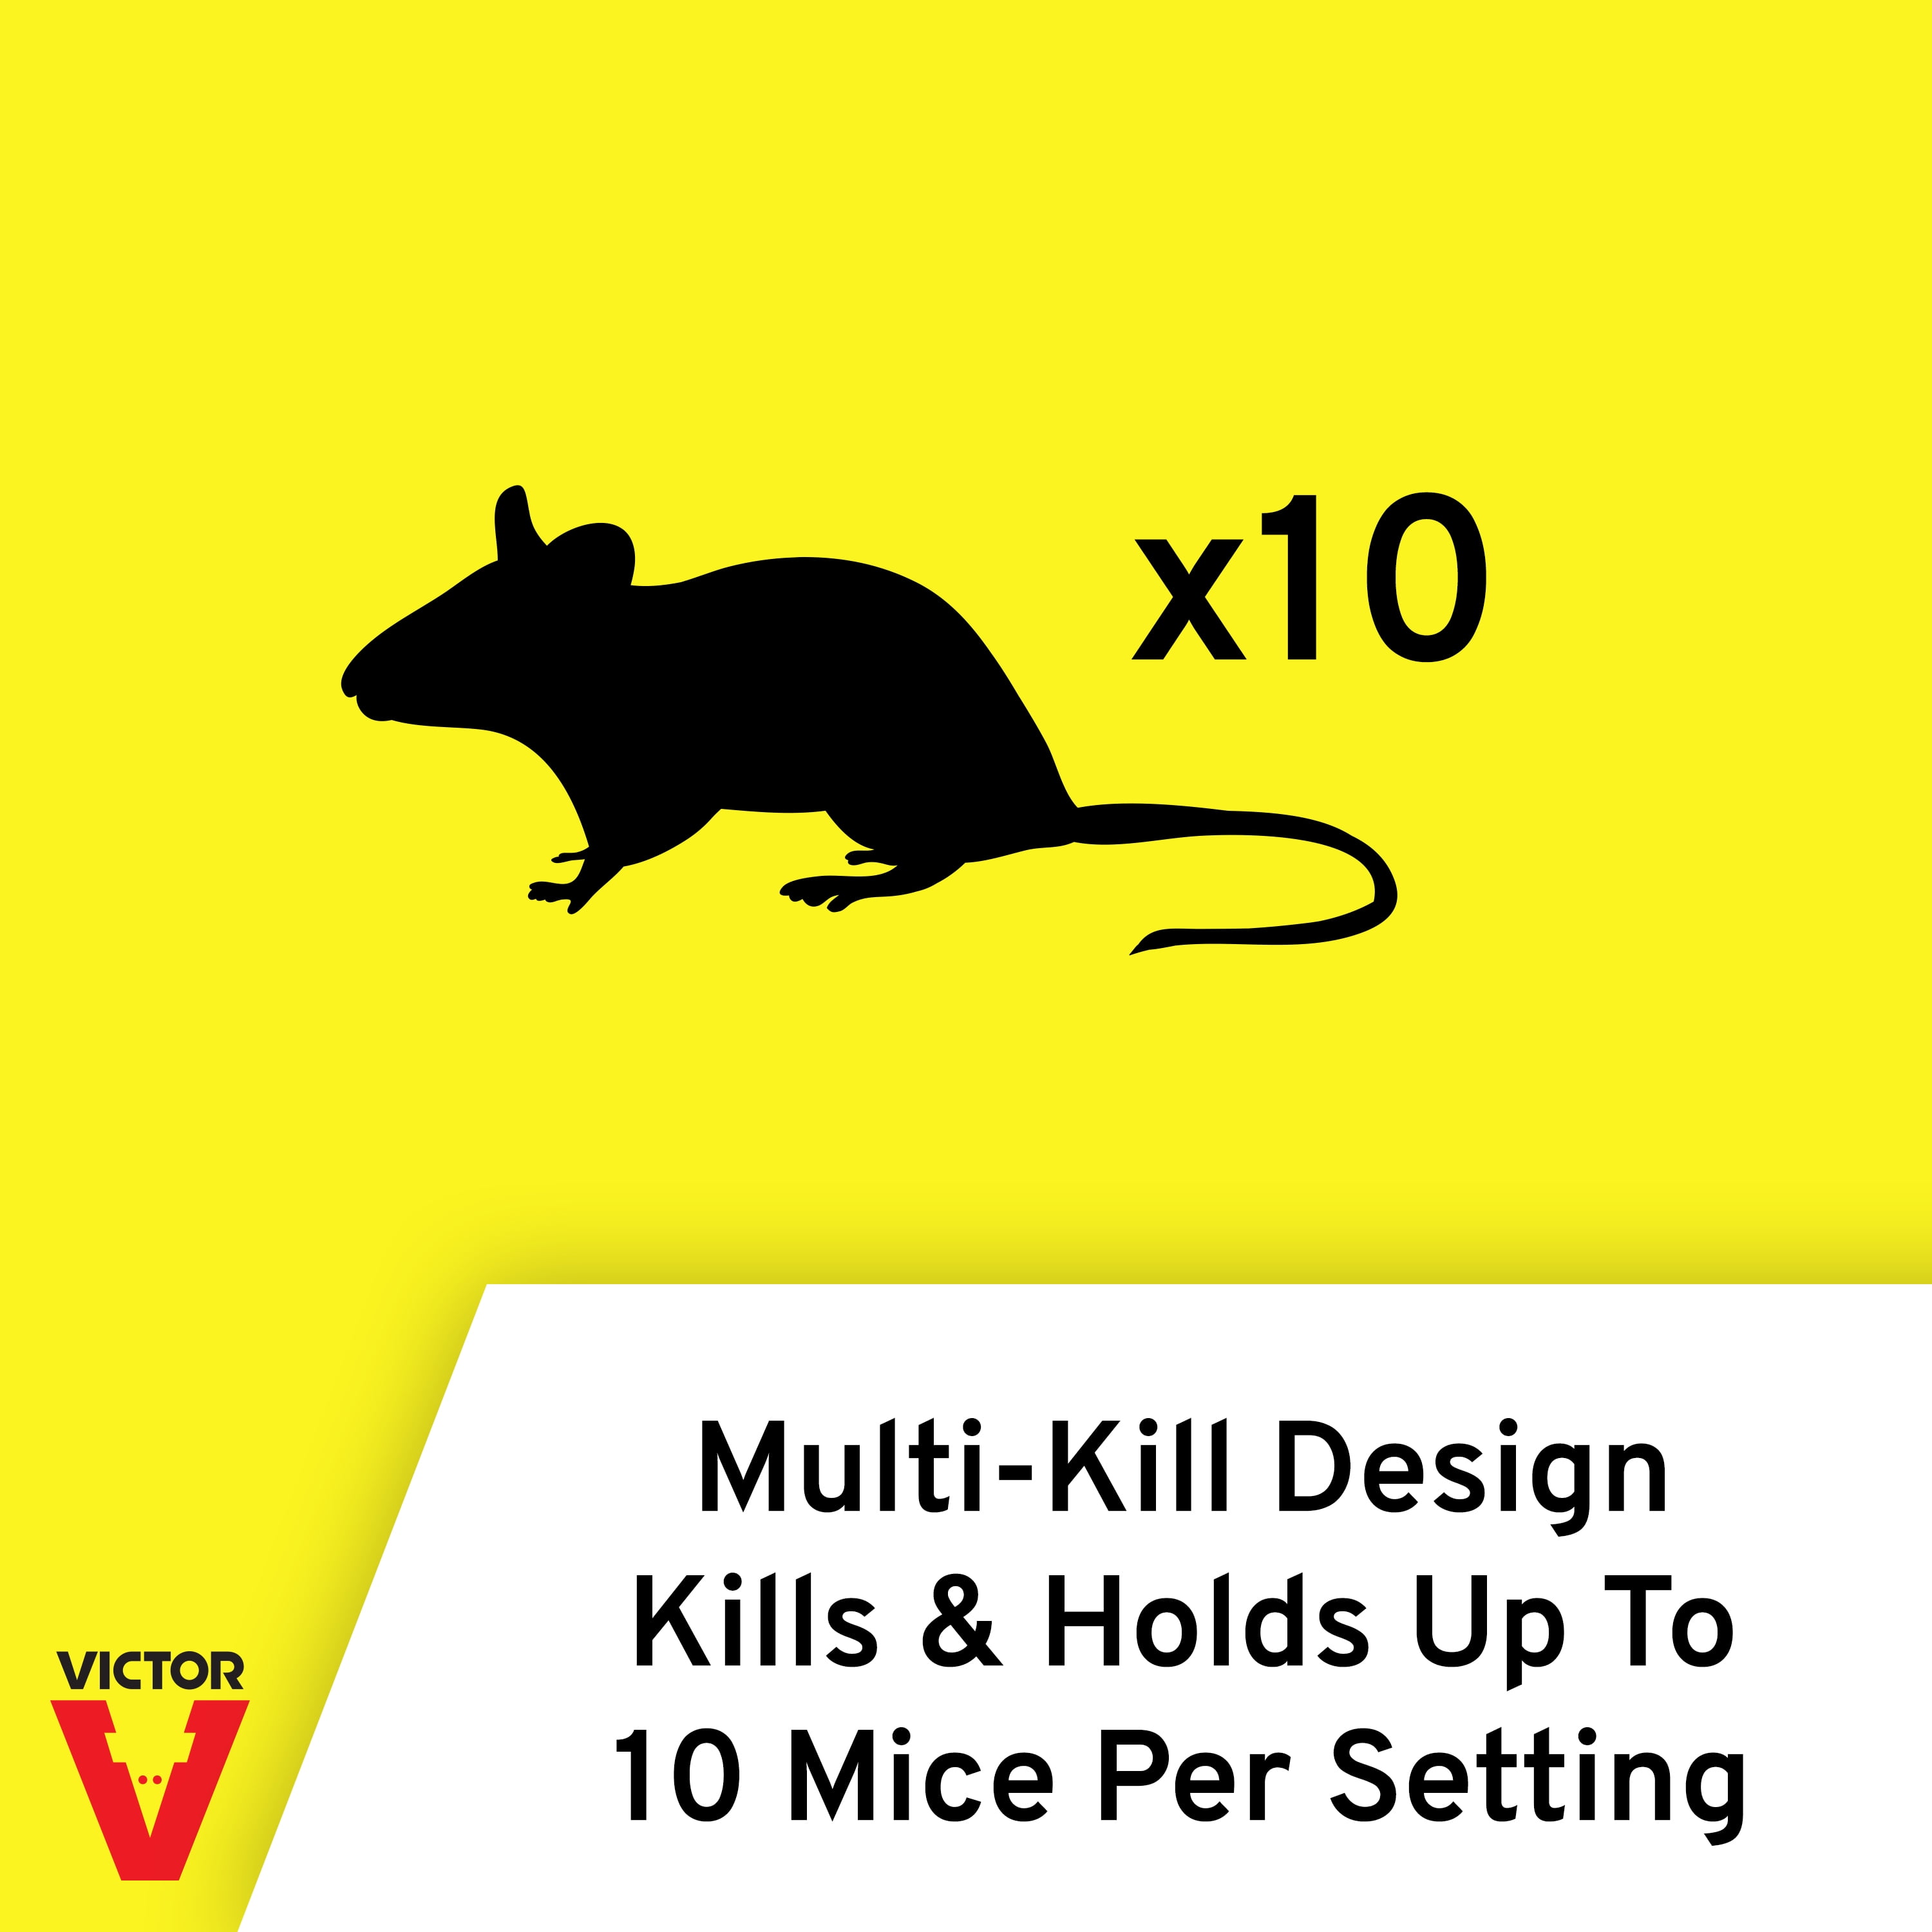 Victor Pest M260 Multi-Kill Electronic Mouse Trap